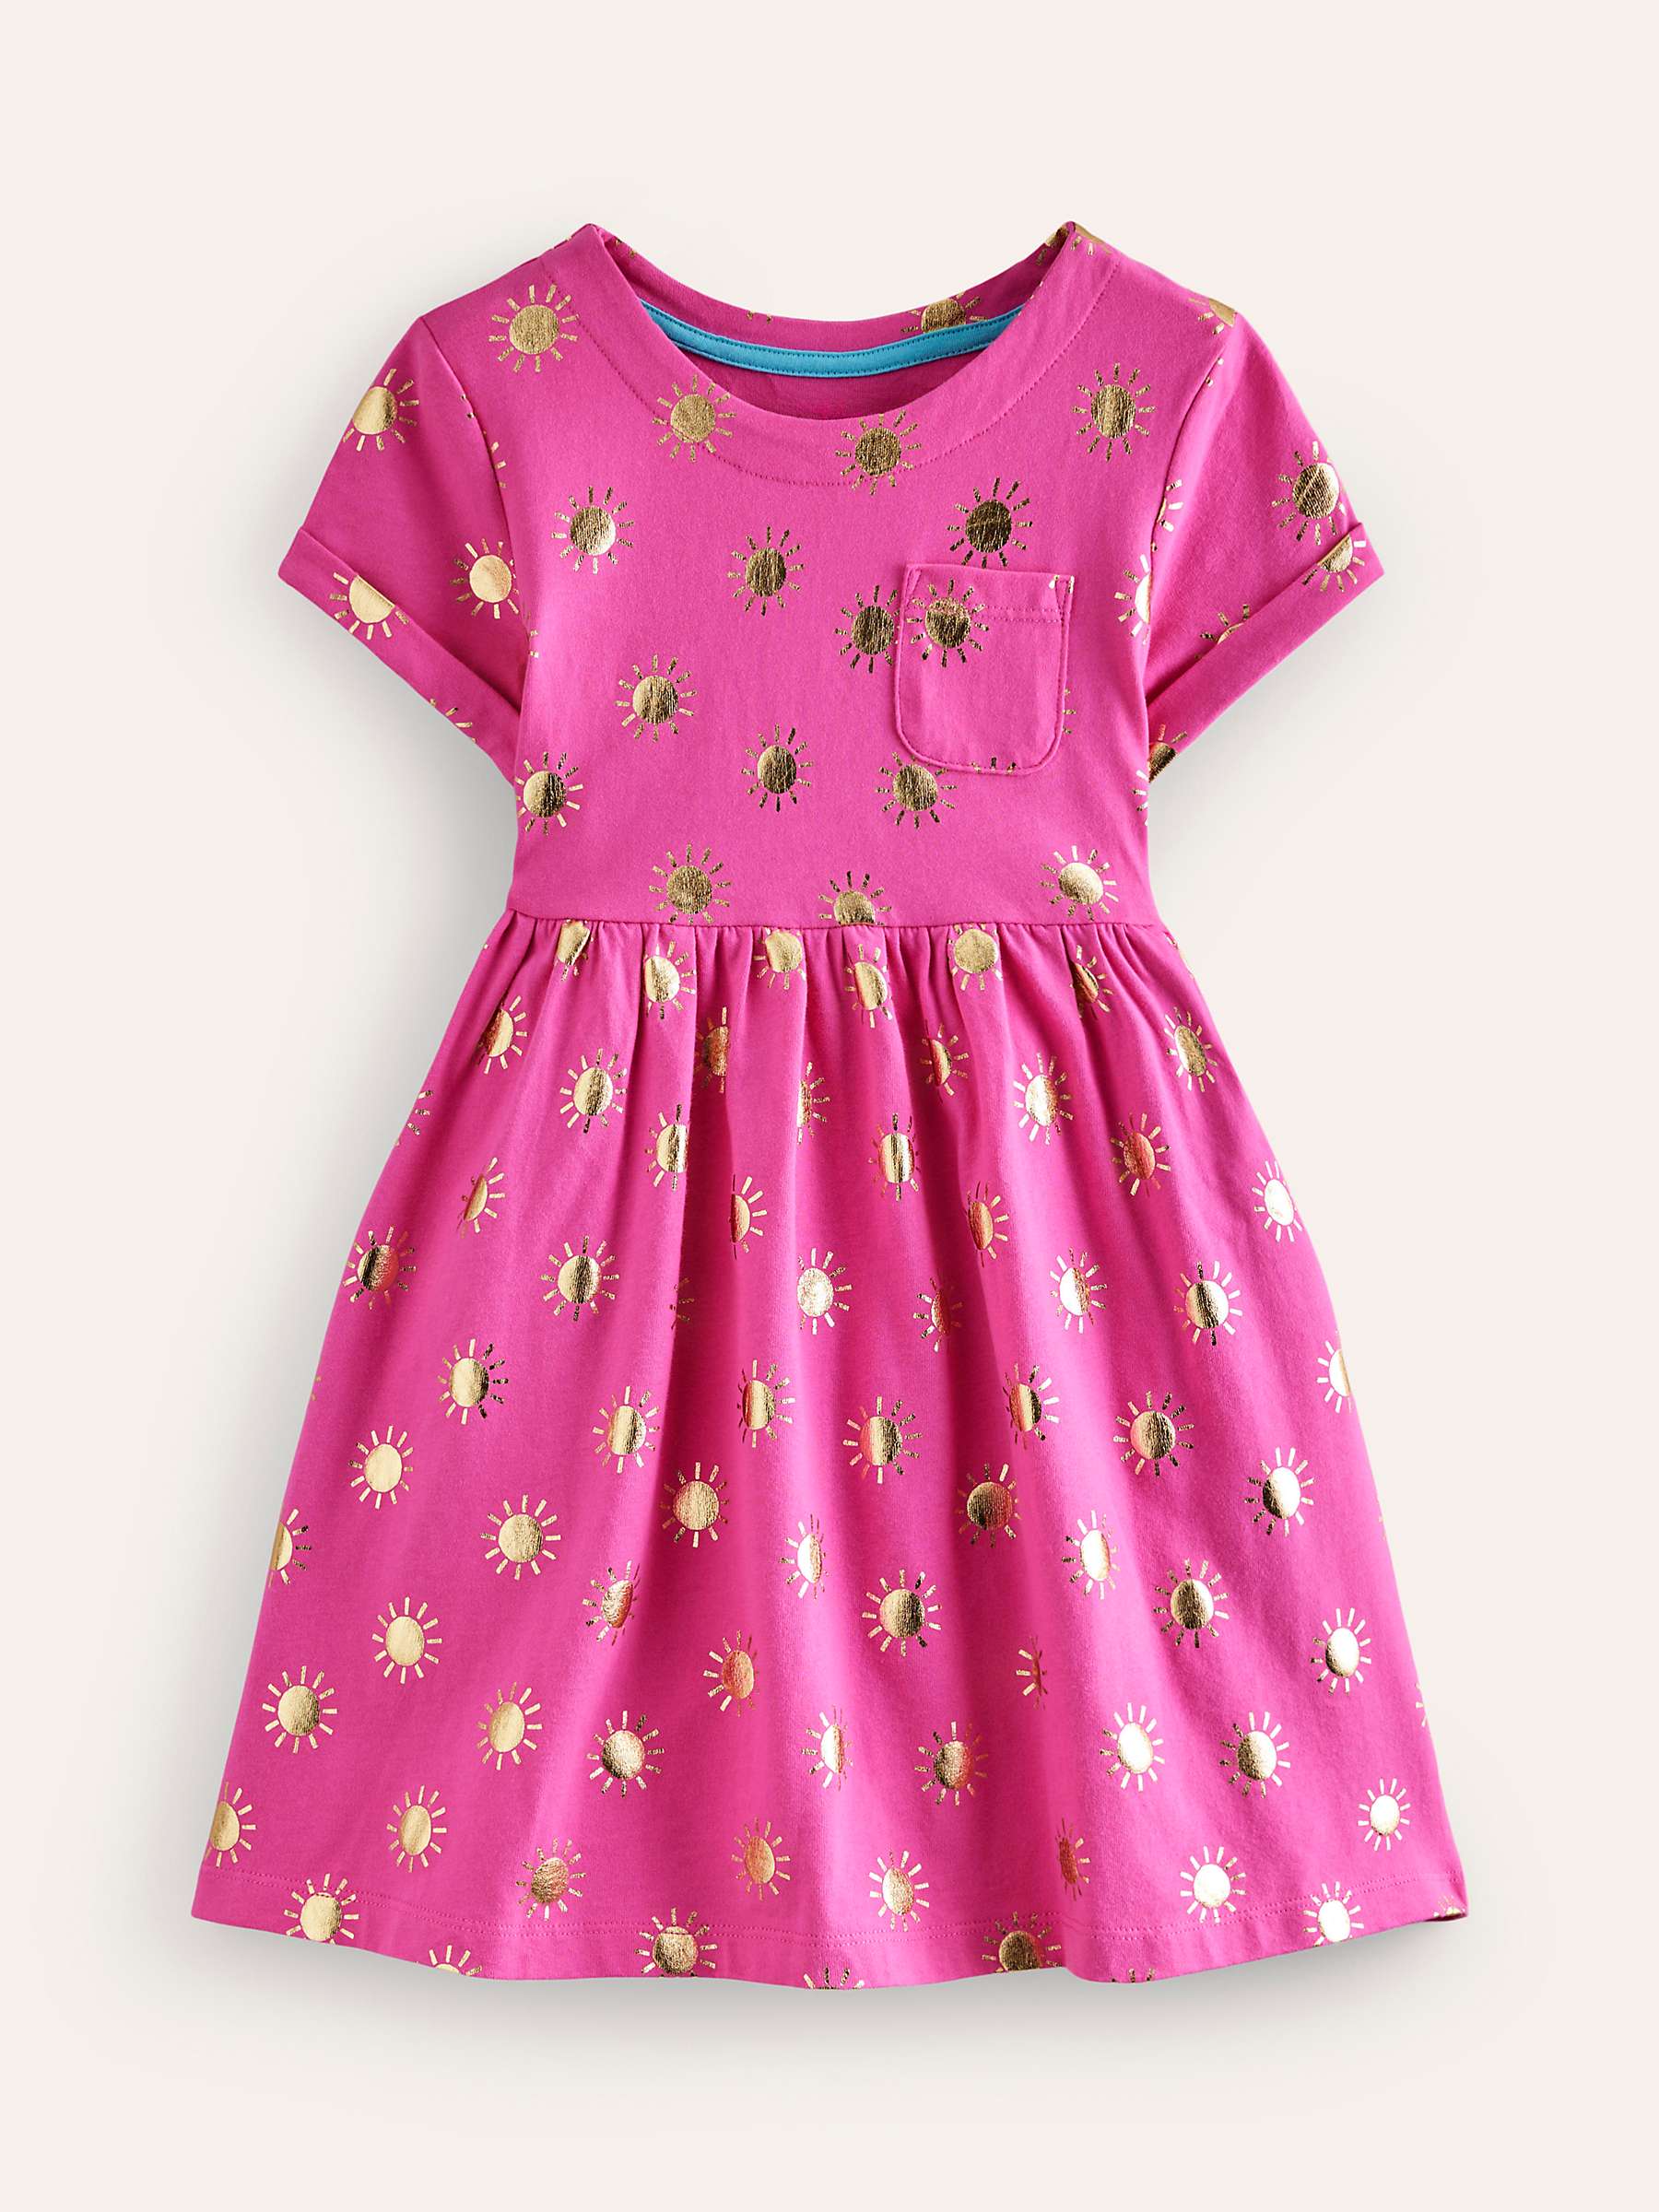 Buy Mini Boden Kids' Suns Short Sleeve Jersey Dress, Pink/Gold Online at johnlewis.com